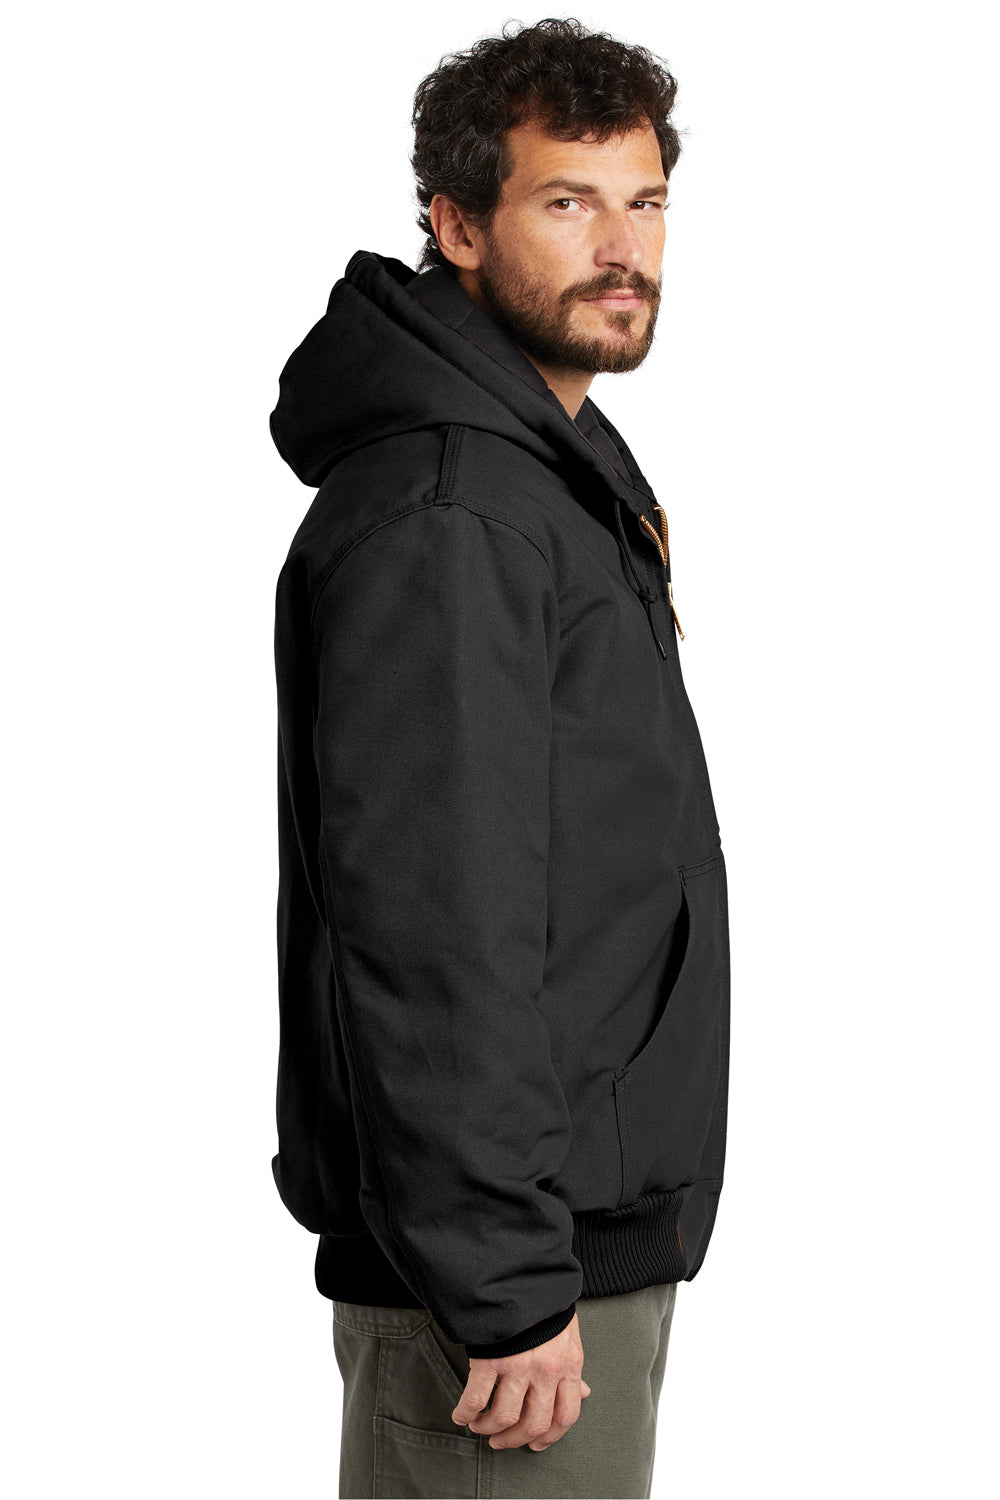 Carhartt CTSJ140/CTTSJ140 Mens Wind & Water Resistant Duck Cloth Full Zip Hooded Work Jacket Black Model Side